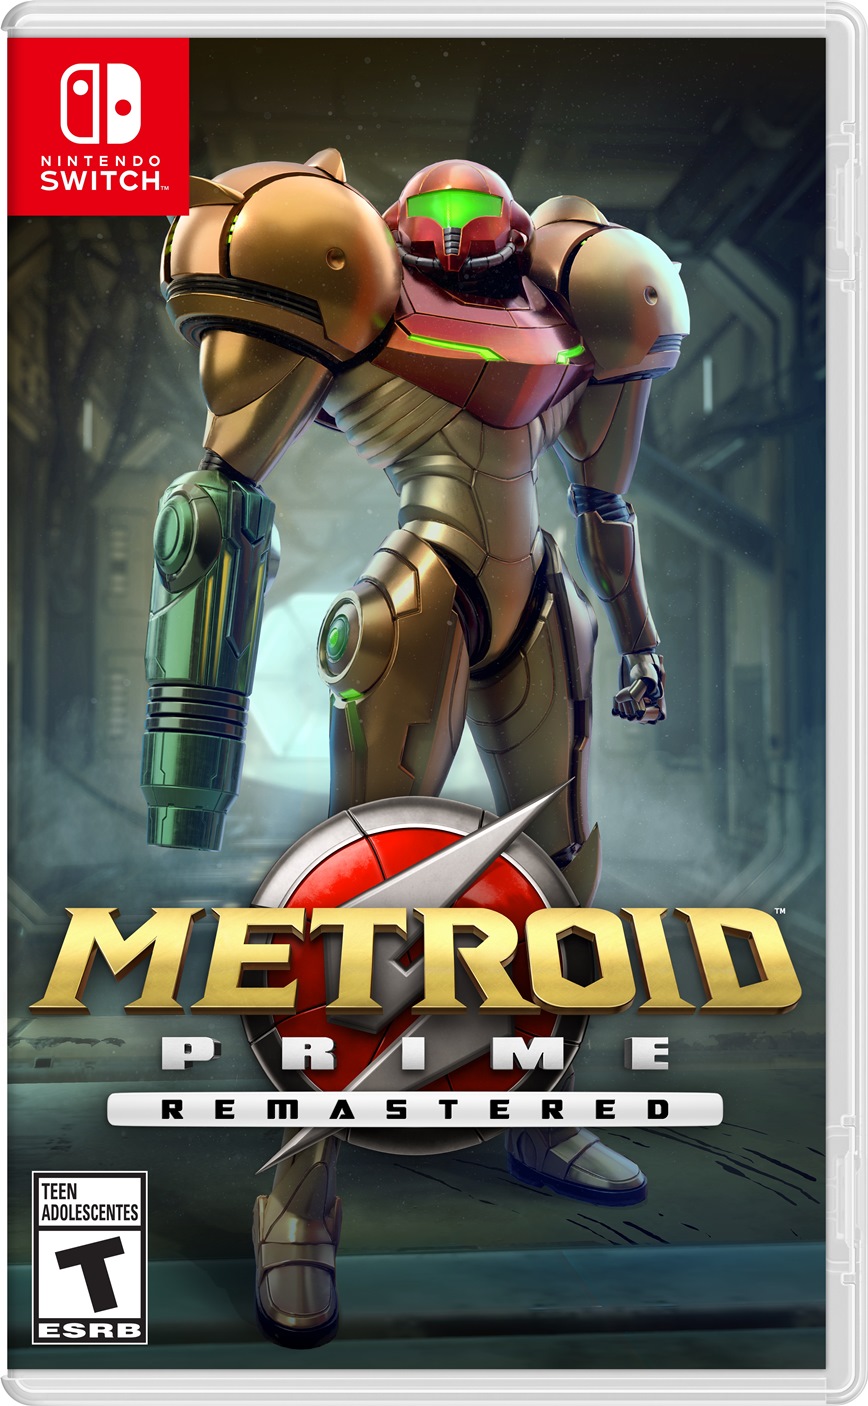 Metroid-Prime-Remastered-boxart.jpg